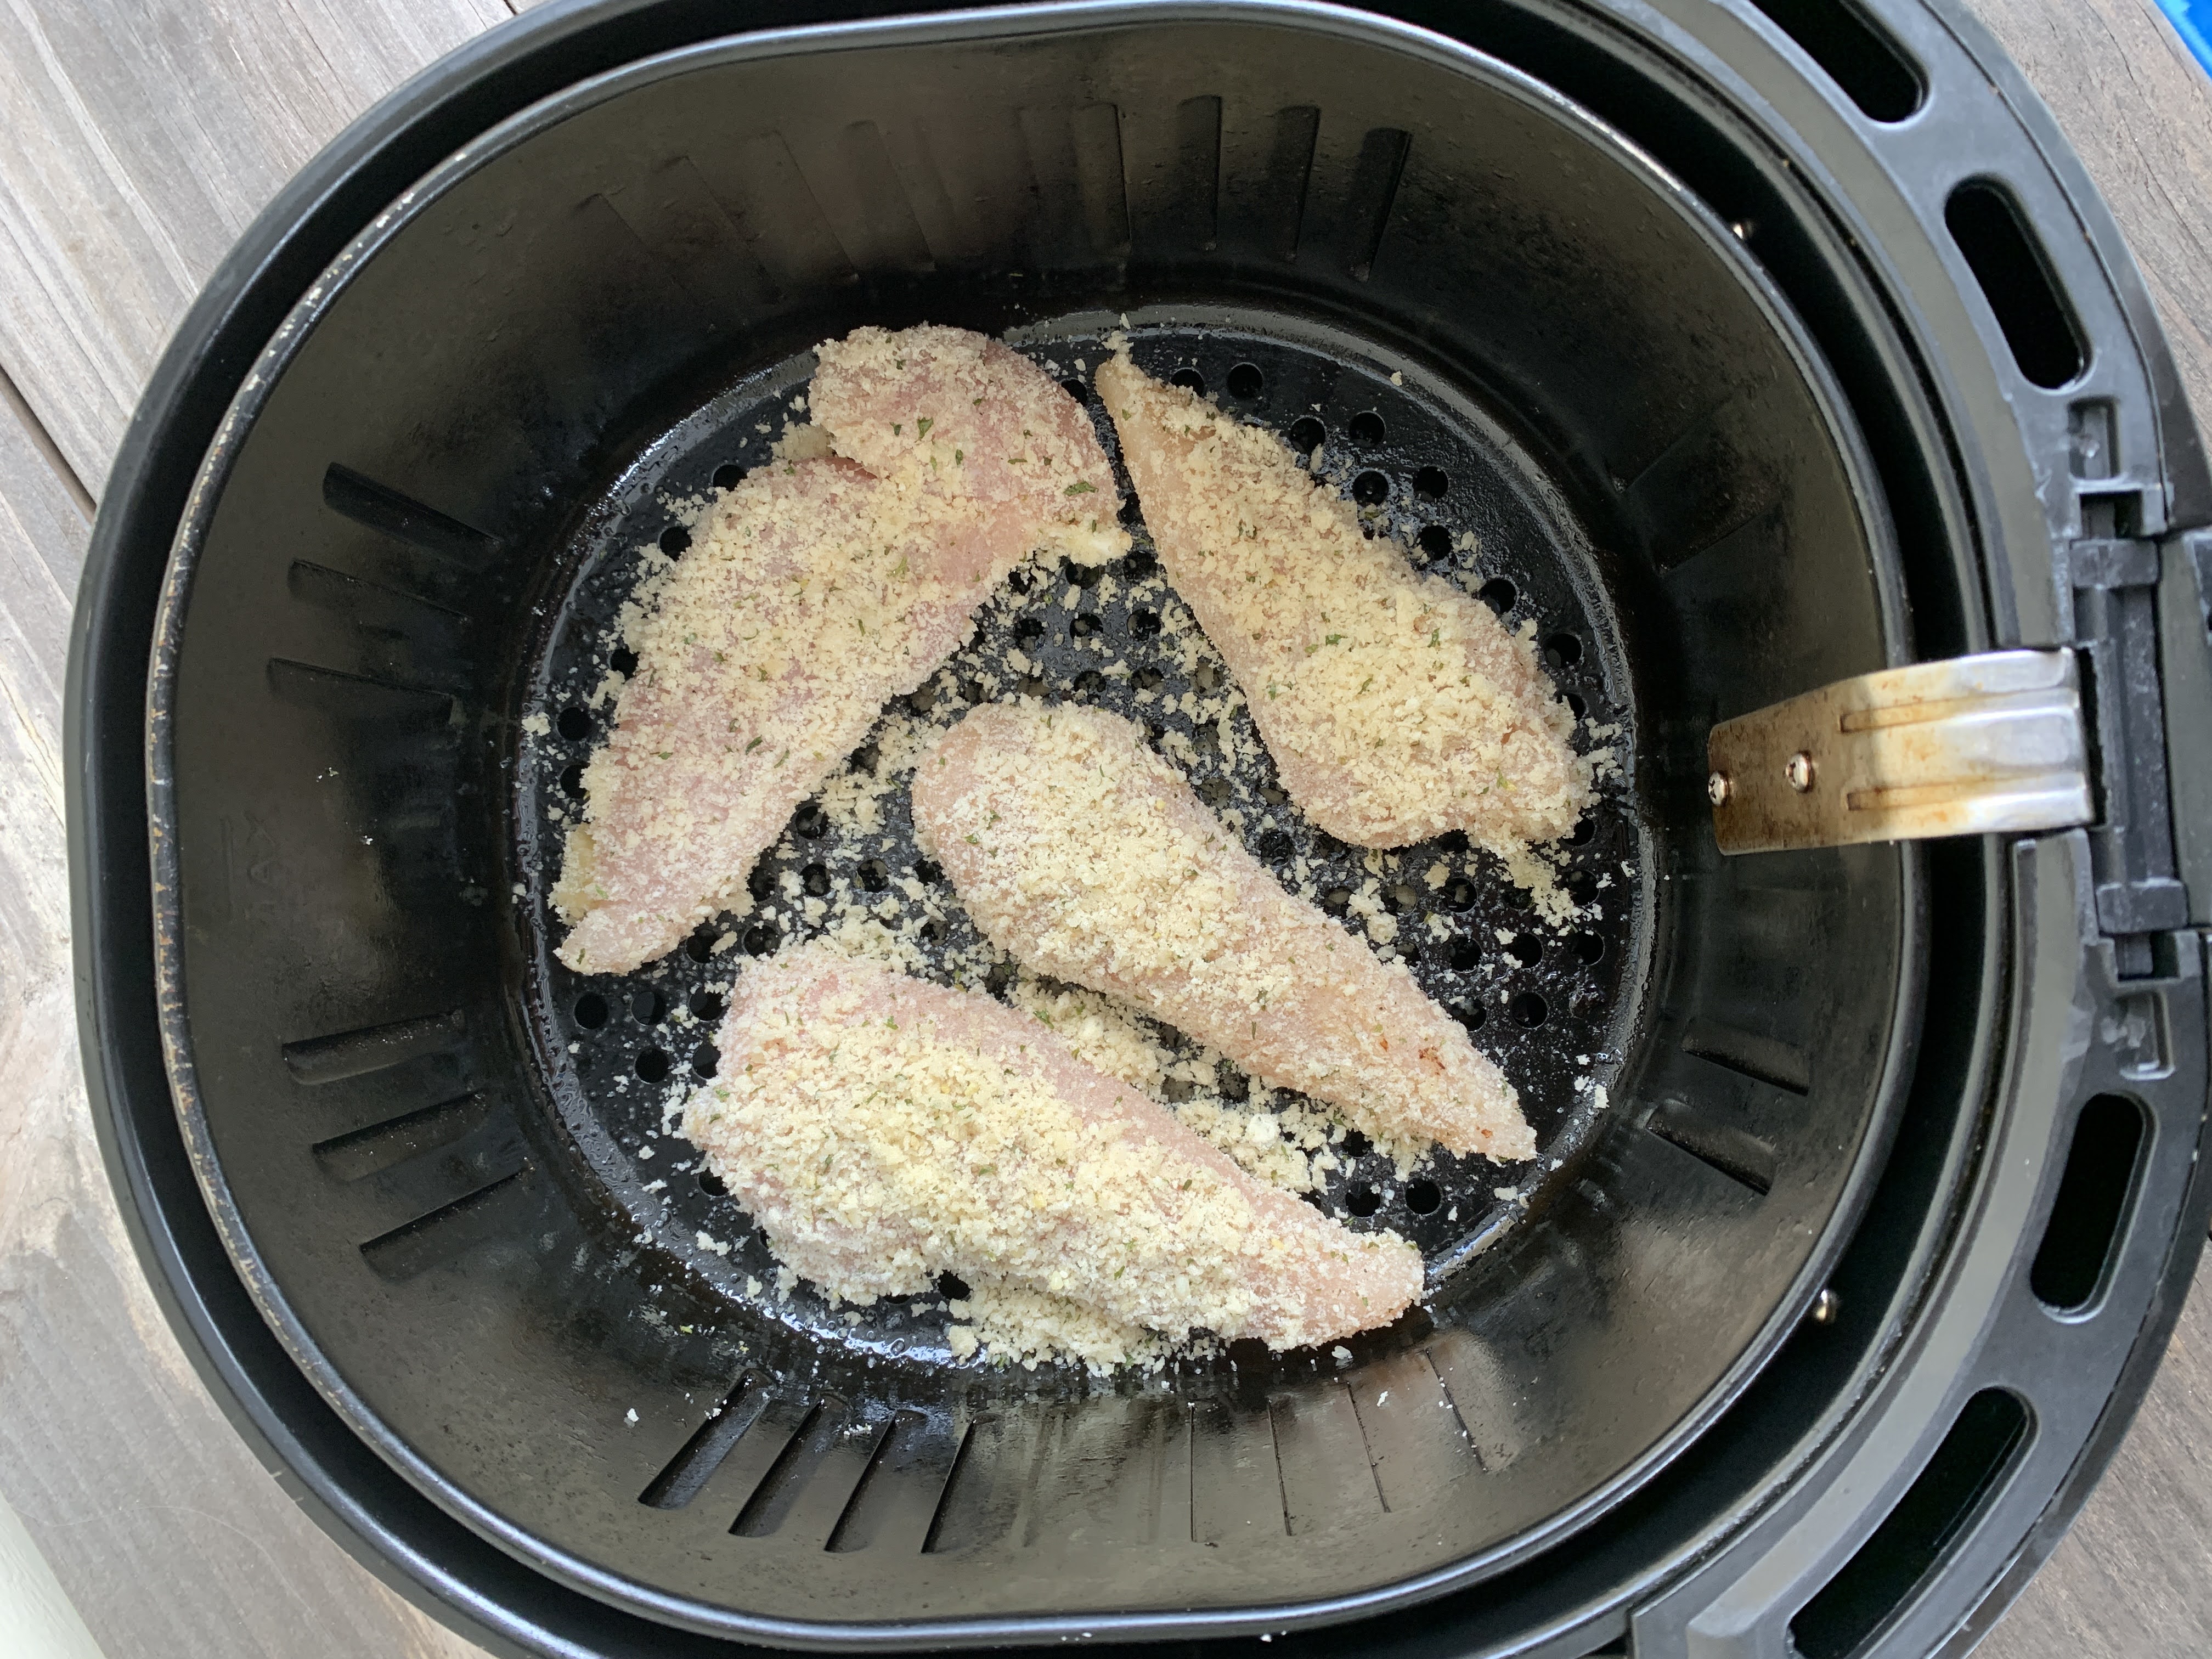 4 uncooked chicken tenders in an air fryer basket